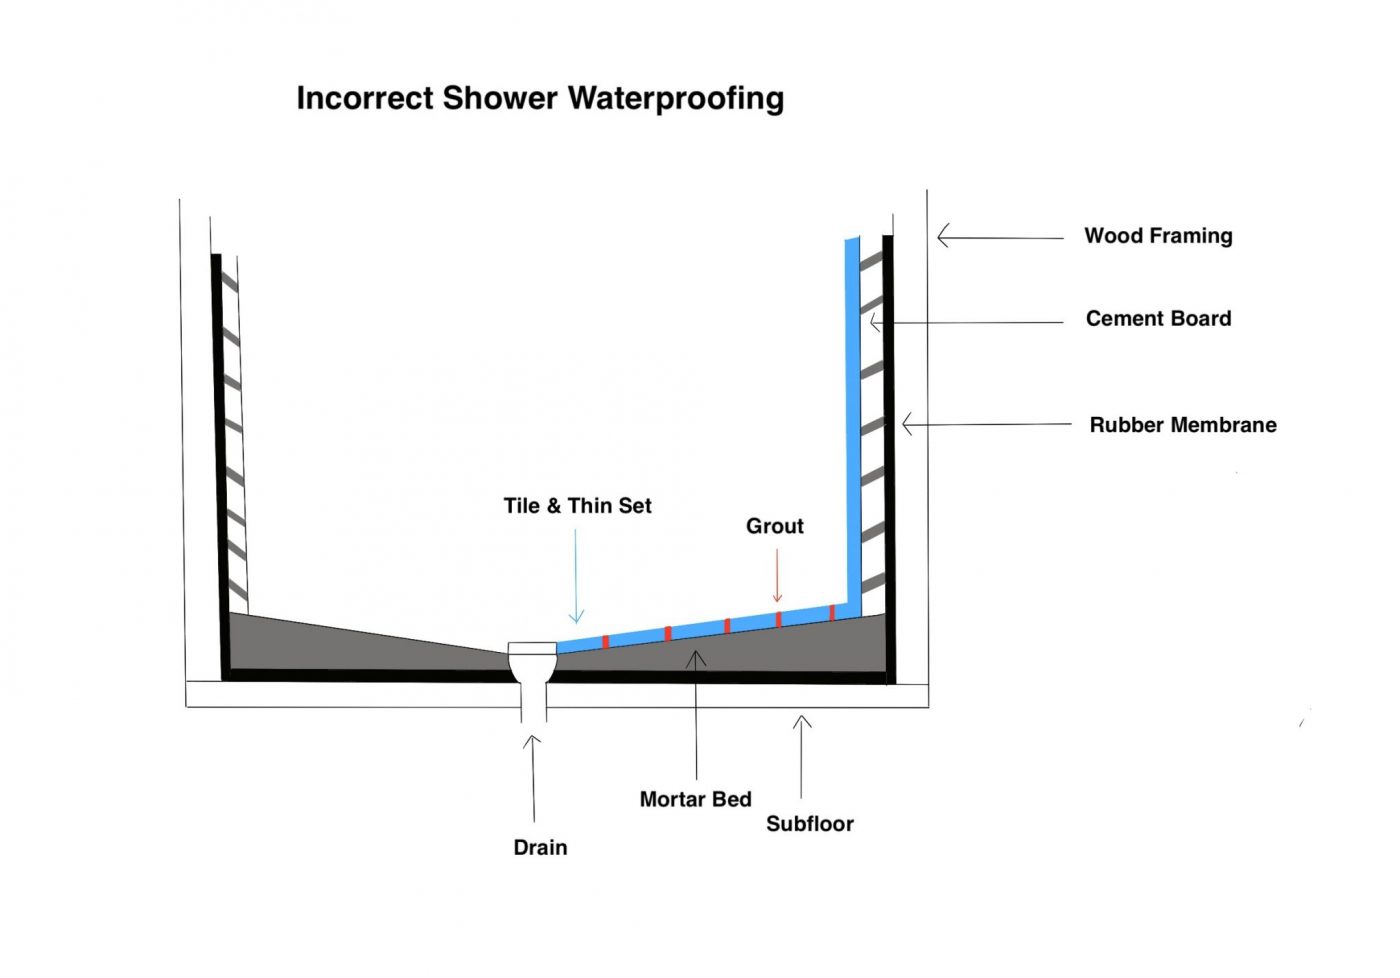 Incorrect Waterproofing